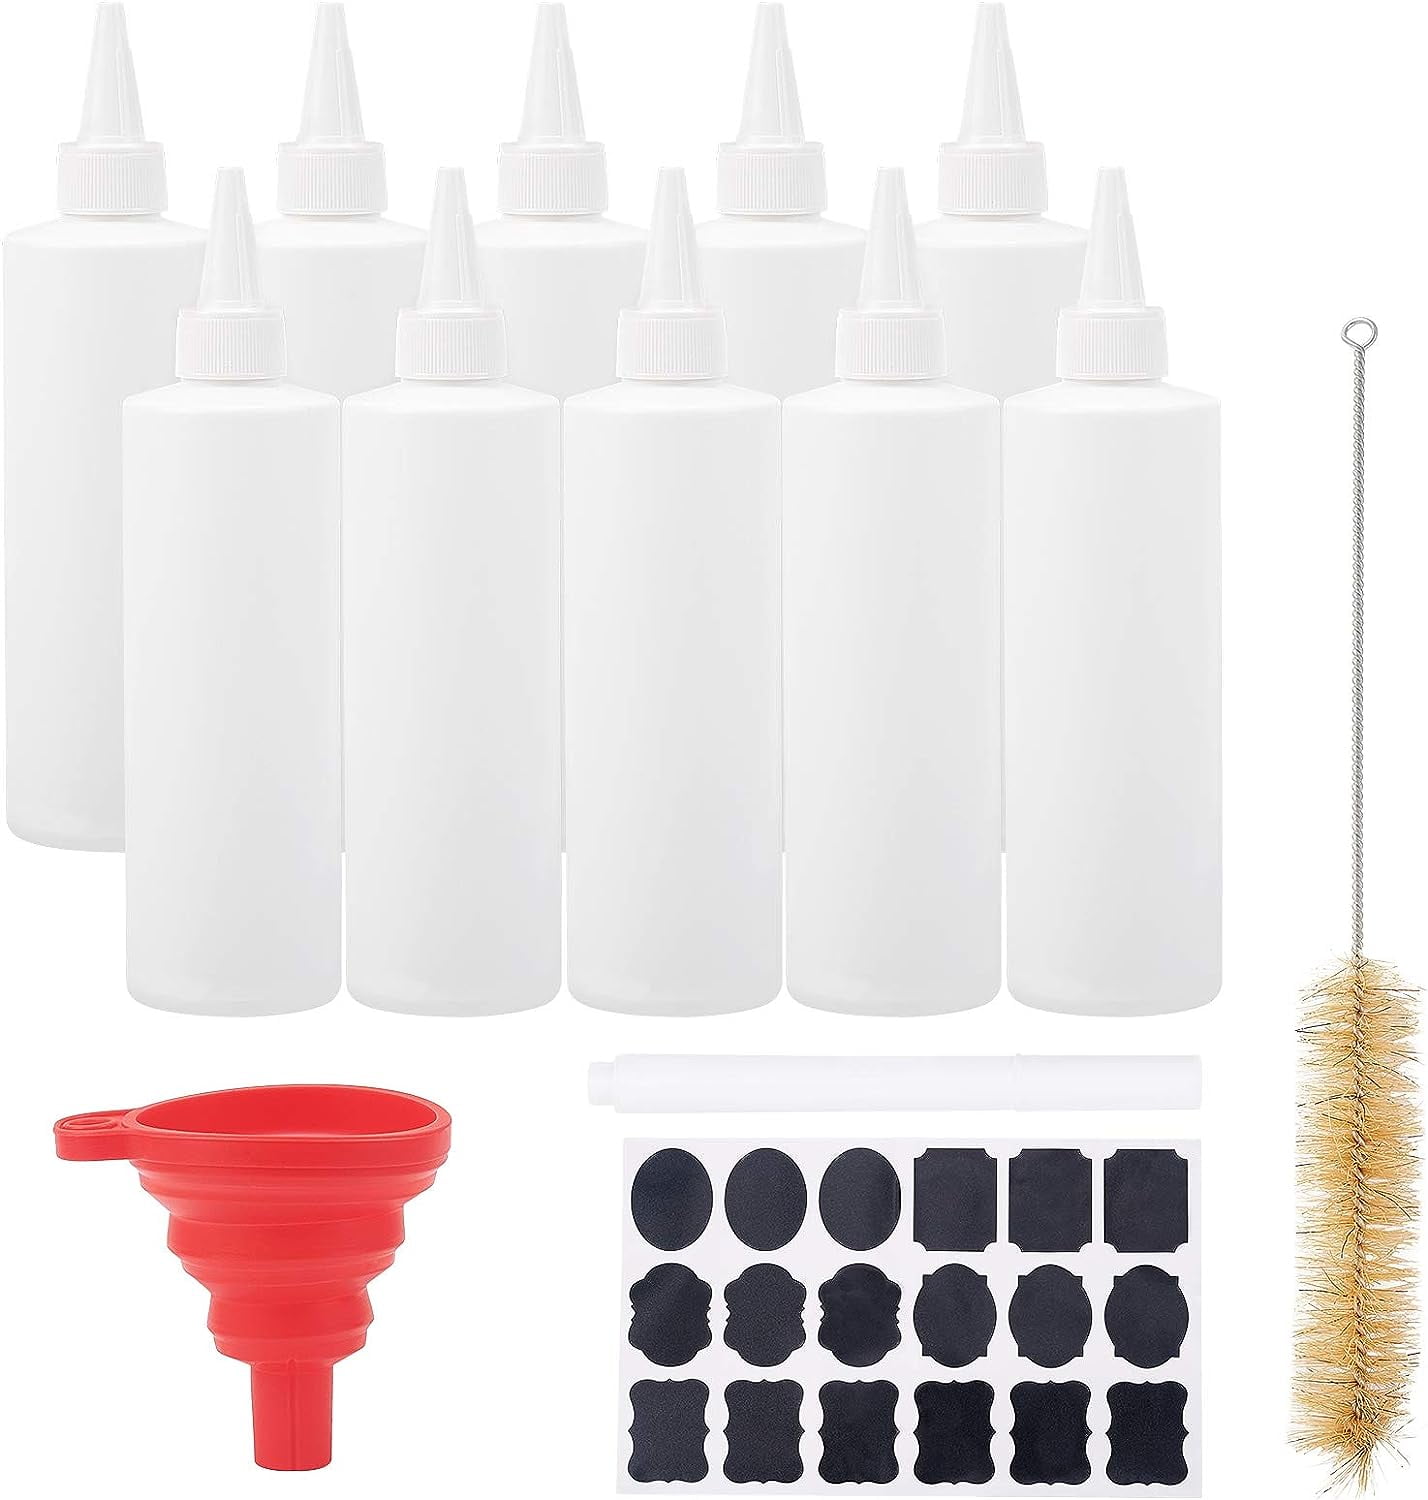 100ml Small Squeeze Bottle, 10pcs Glue Applicator Bottle Mini Squirt Bottle with Cap for Gun Oil Glue, White